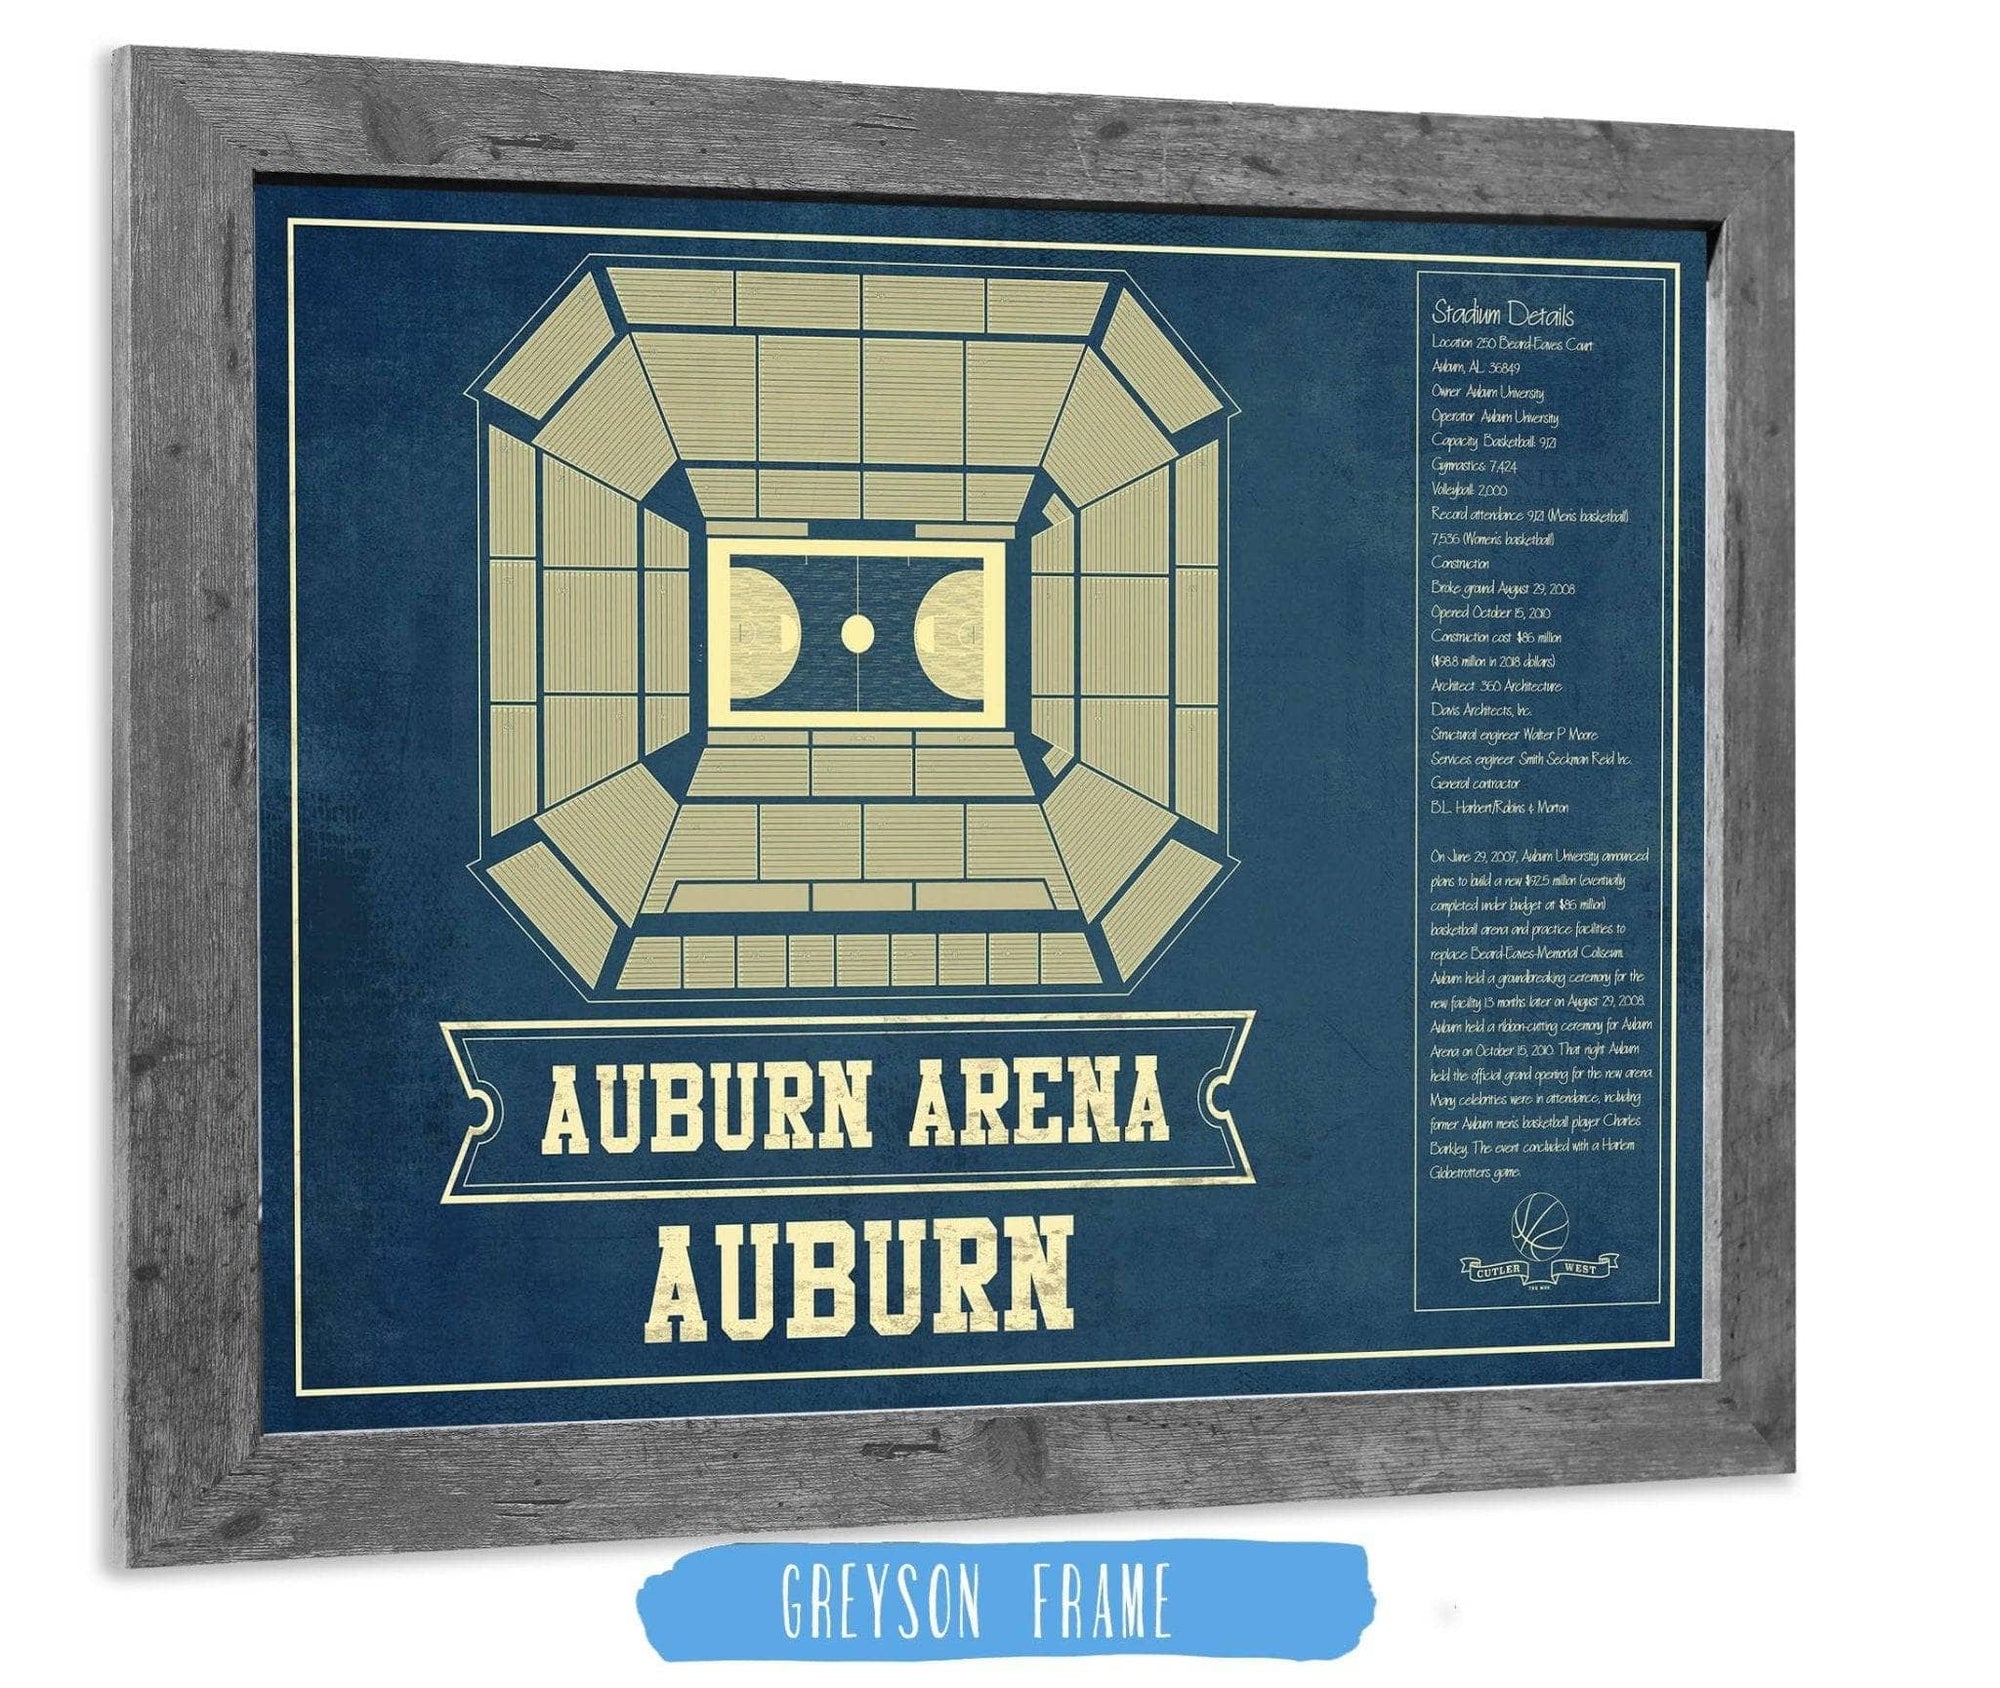 Cutler West Basketball Collection 14" x 11" / Greyson Frame Auburn Tigers - Jordan-Hare Vintage Stadium Blueprint 845000160_81981